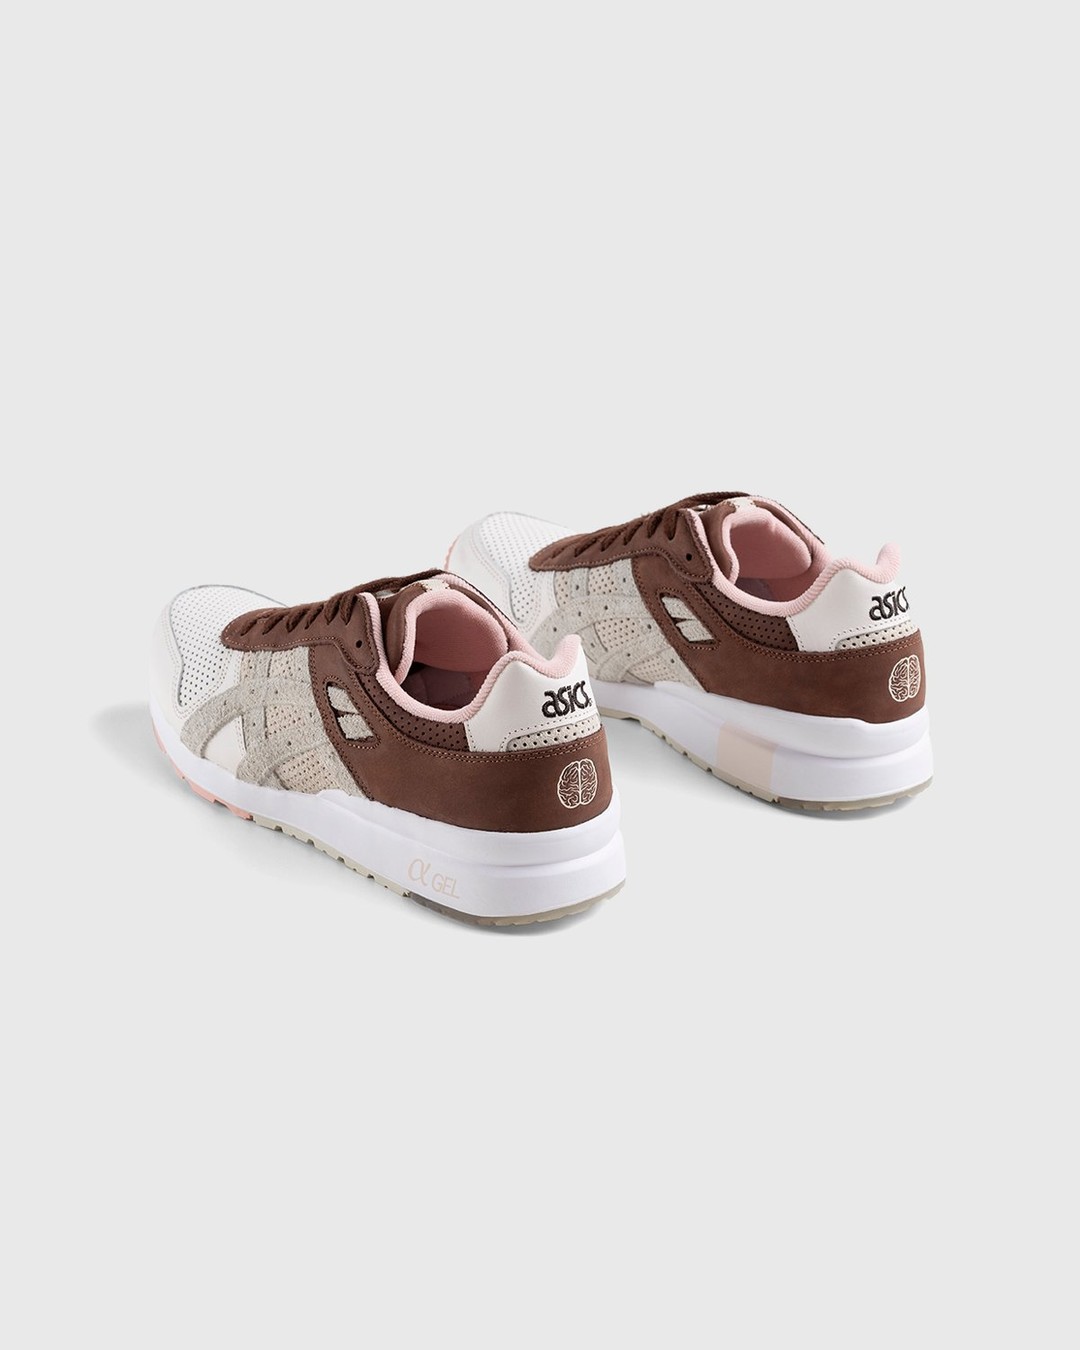 asics x Afew – GT-II Blush/Chocolate Brown - Sneakers - Pink - Image 4